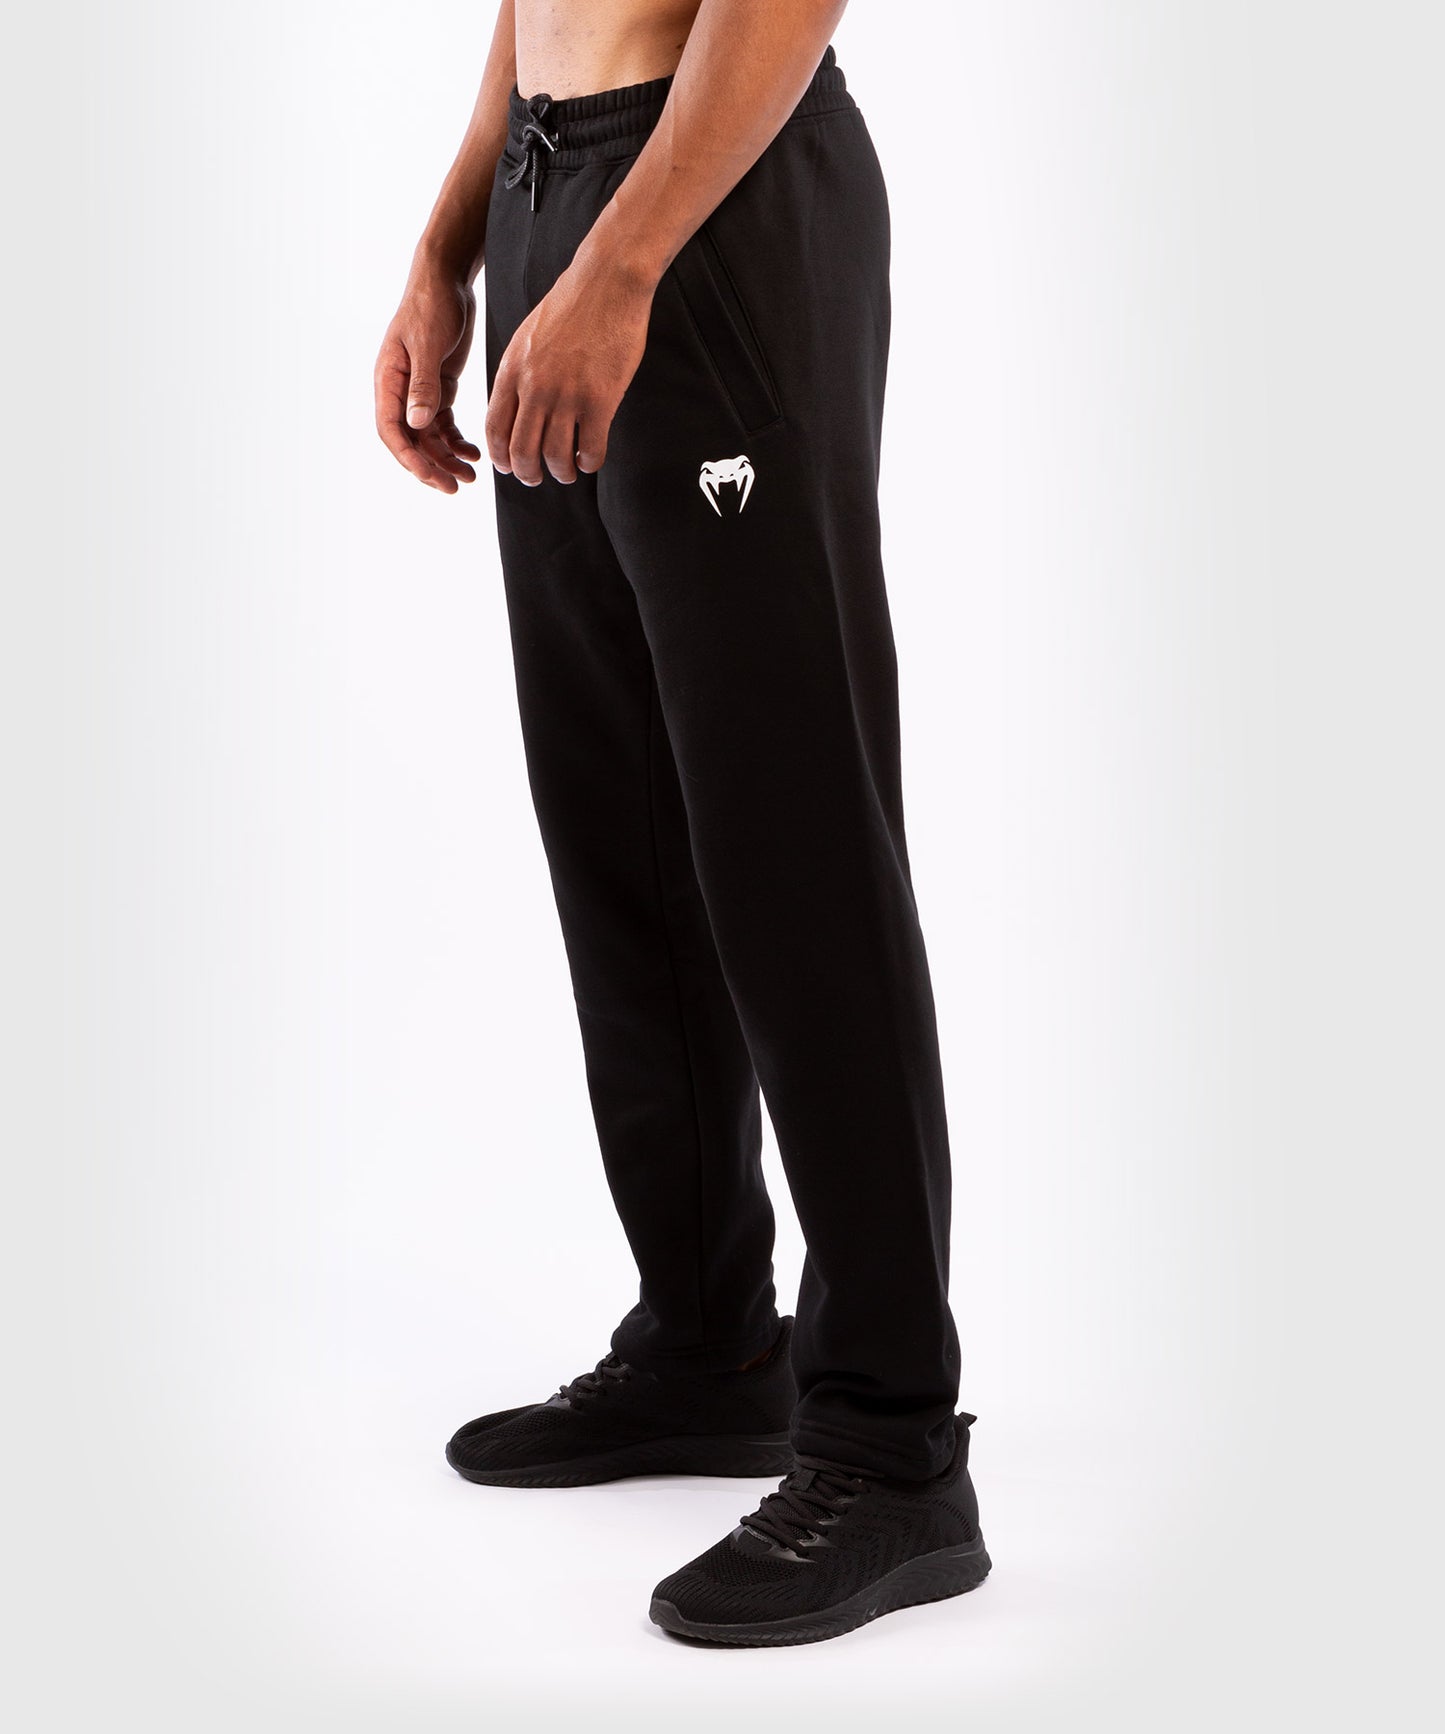 Pantalones deportivos Venum Classic - Negro/Blanco